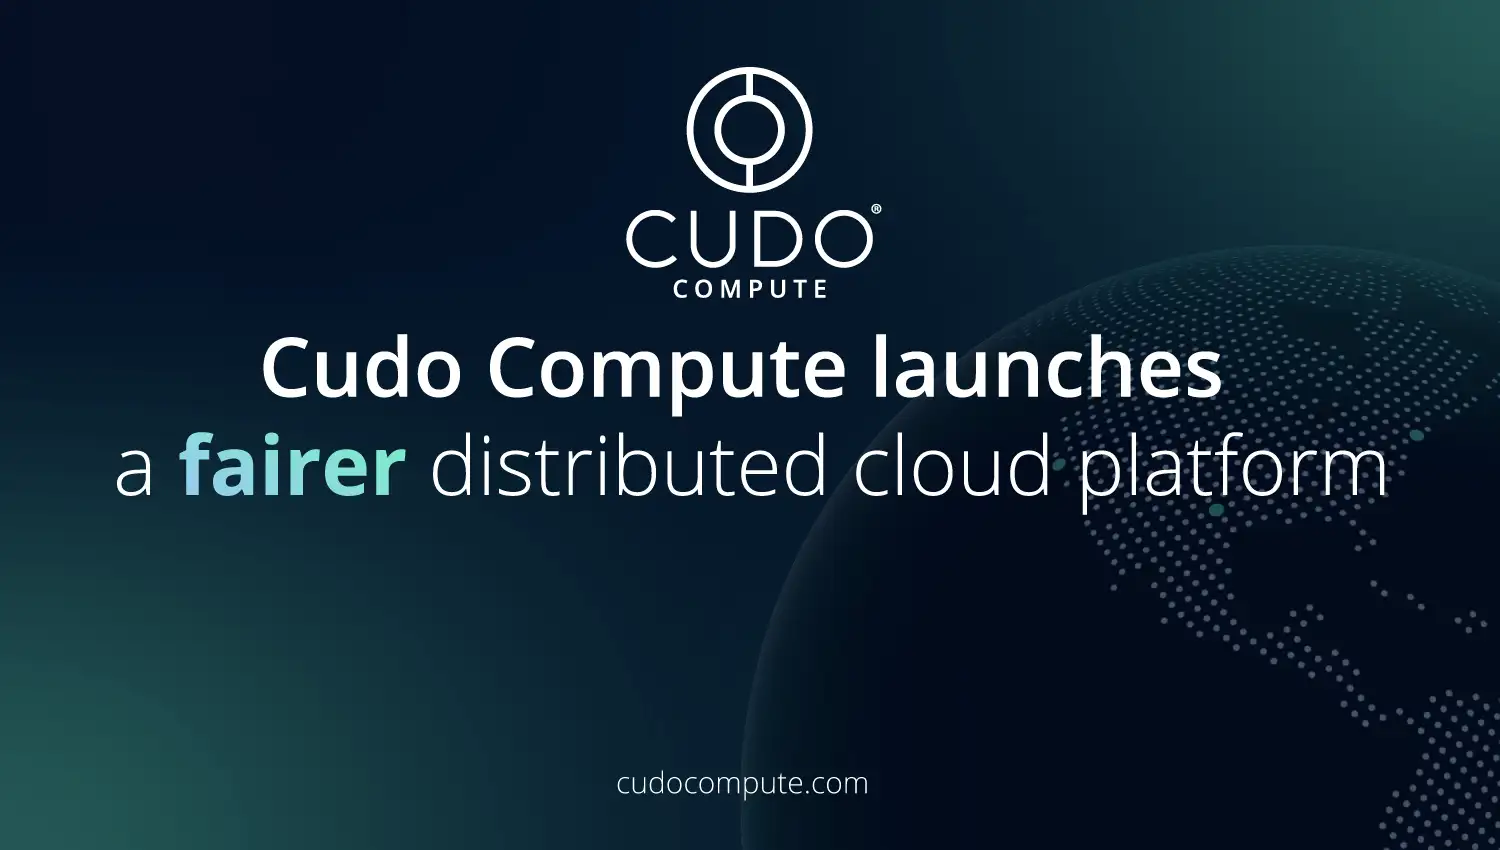 Cudo Compute launches a fairer distributed cloud platform